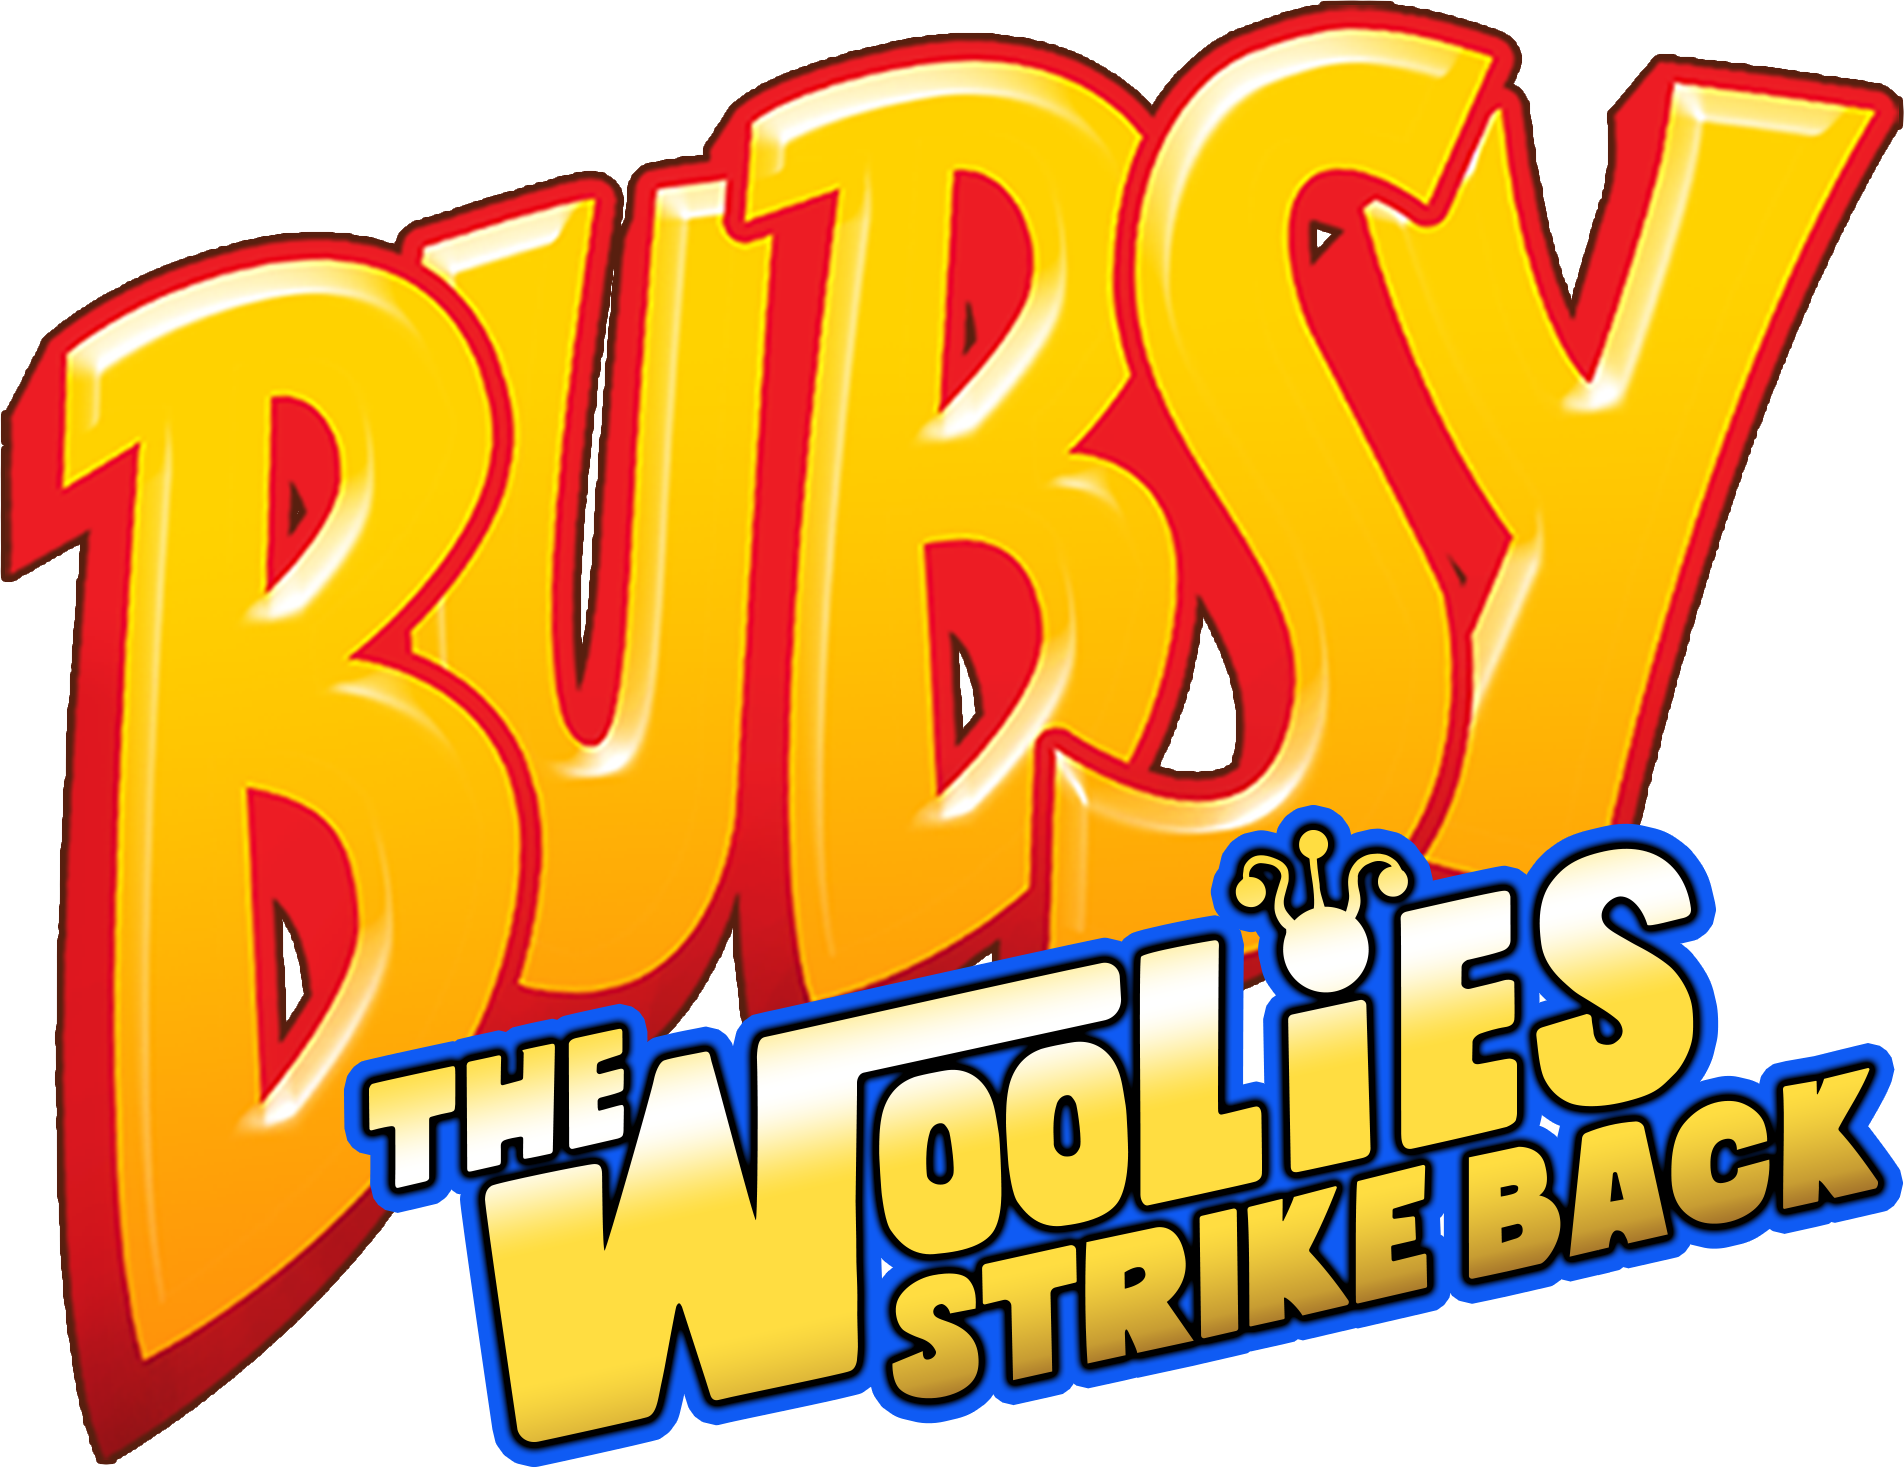 Bubsy: The Woolies Strike Back